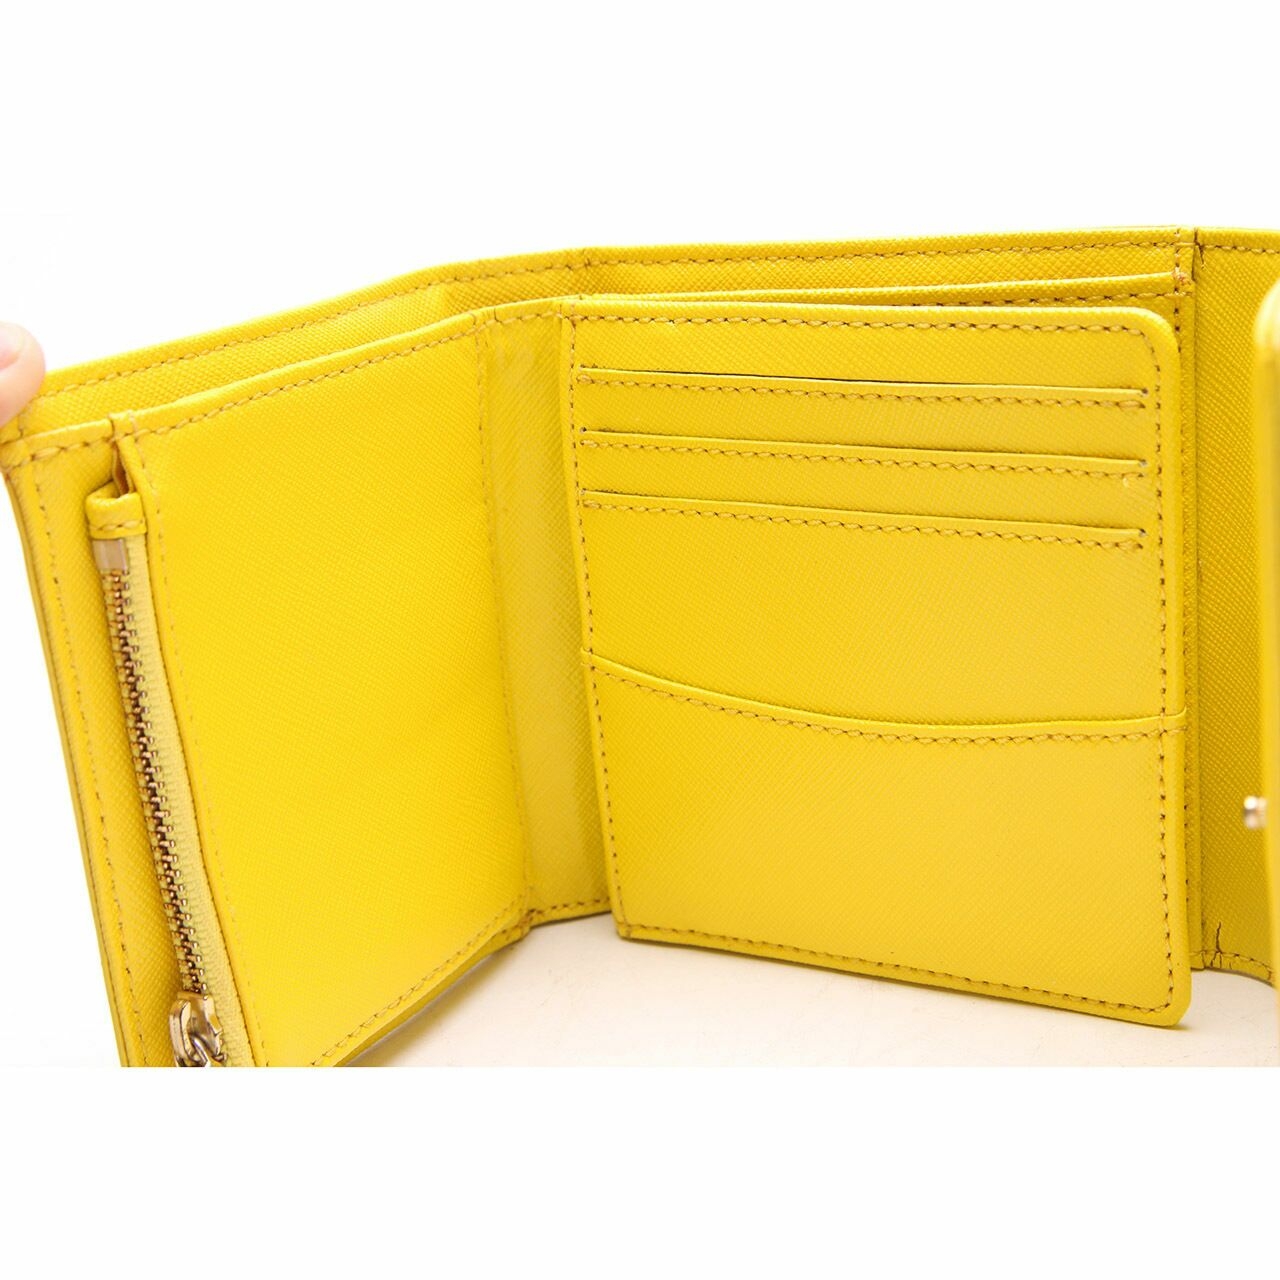 Tory Burch Yellow Flap Wallet 